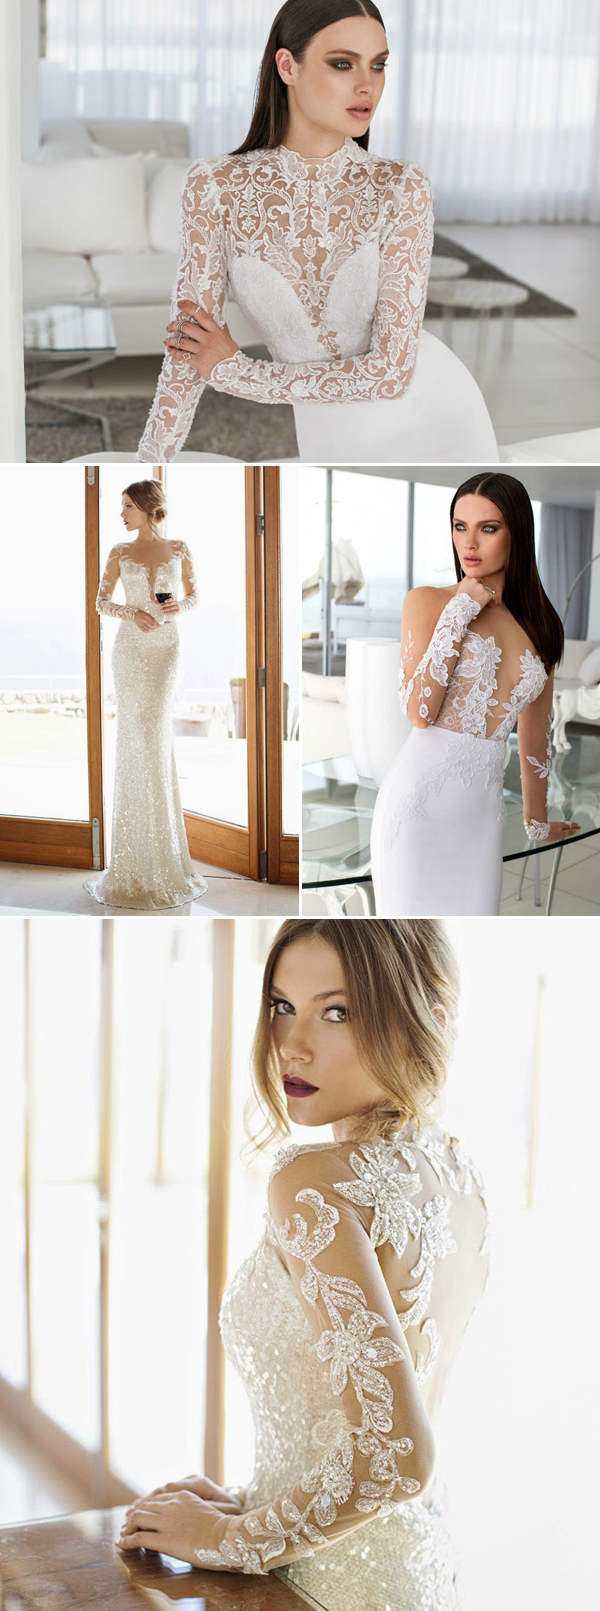 Sexiest Collection Ever Top 10 Israeli Wedding Dress Designers We Love Praise Wedding